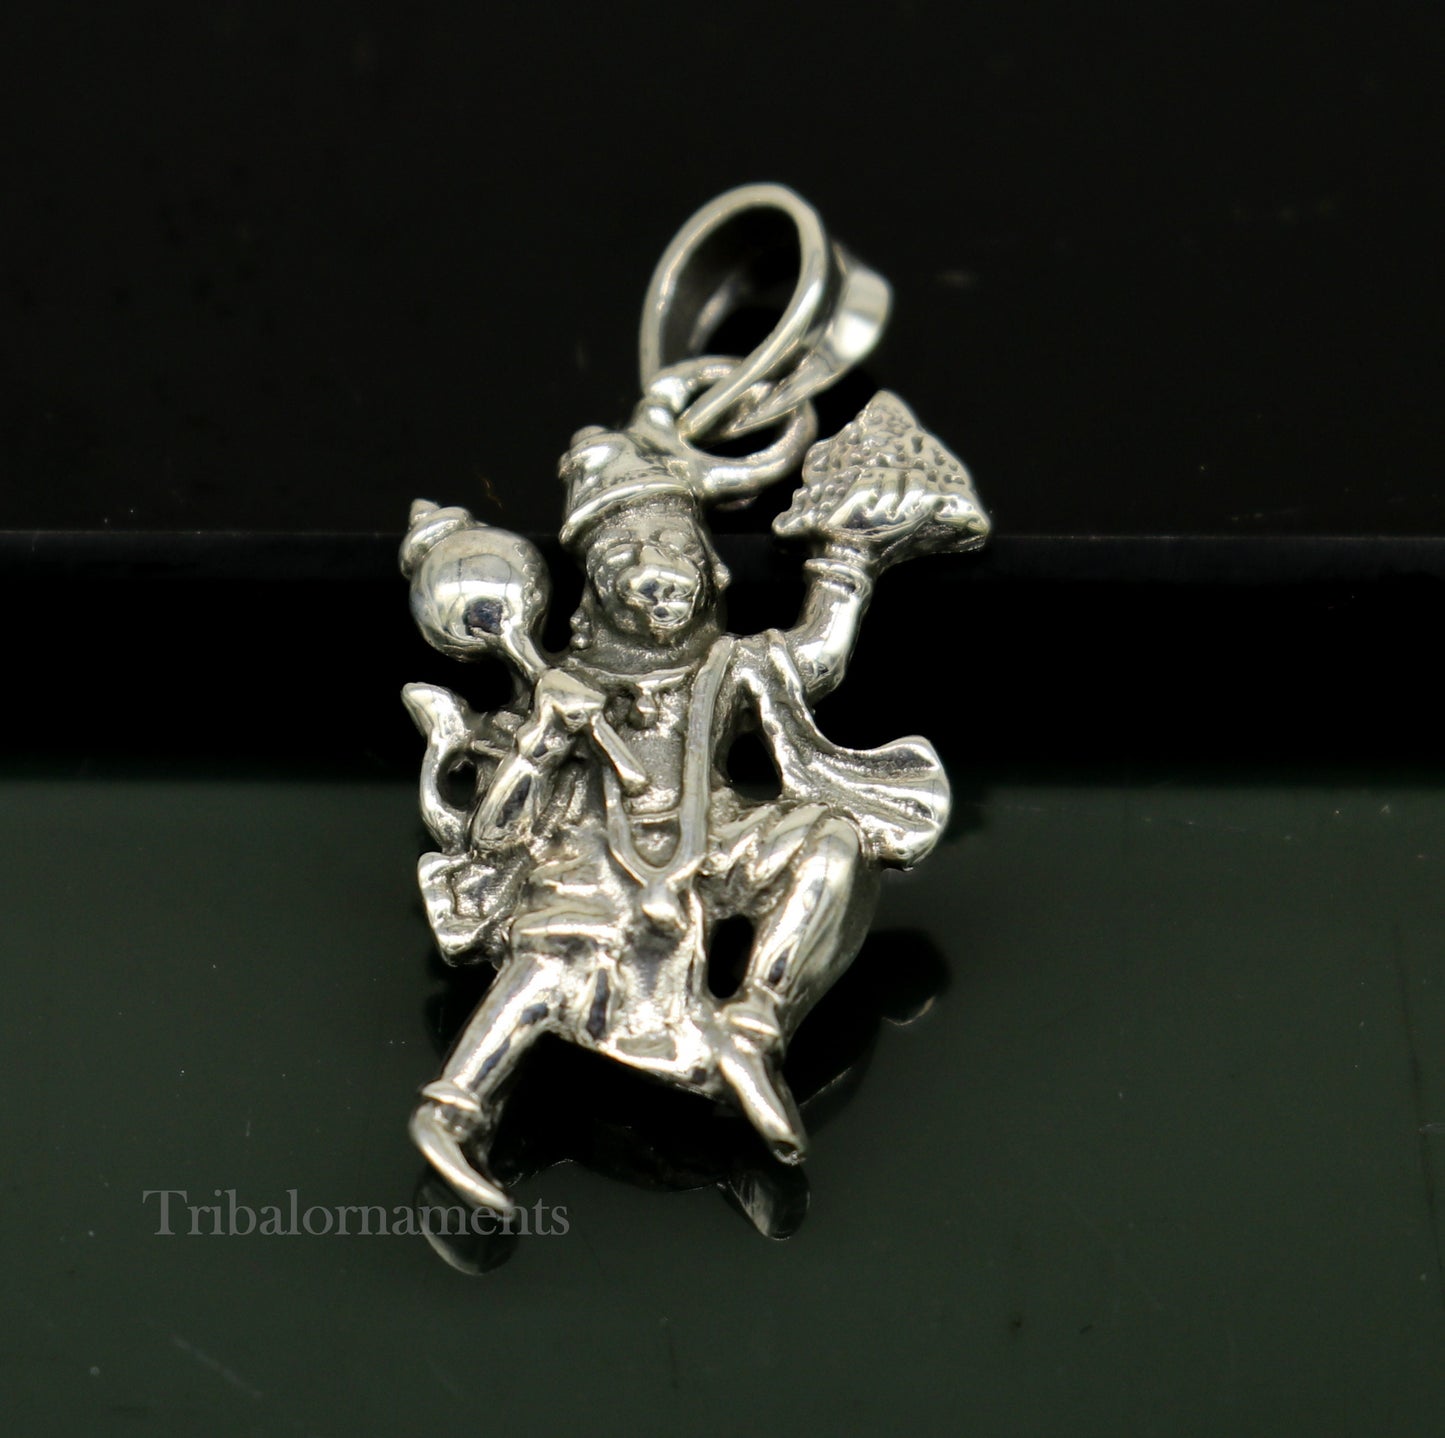 Flying hanuman pendant 92.5 sterling silver handmade god idol hanuman pendant, amazing craftsmanship pendant gifting jewelry ssp939 - TRIBAL ORNAMENTS